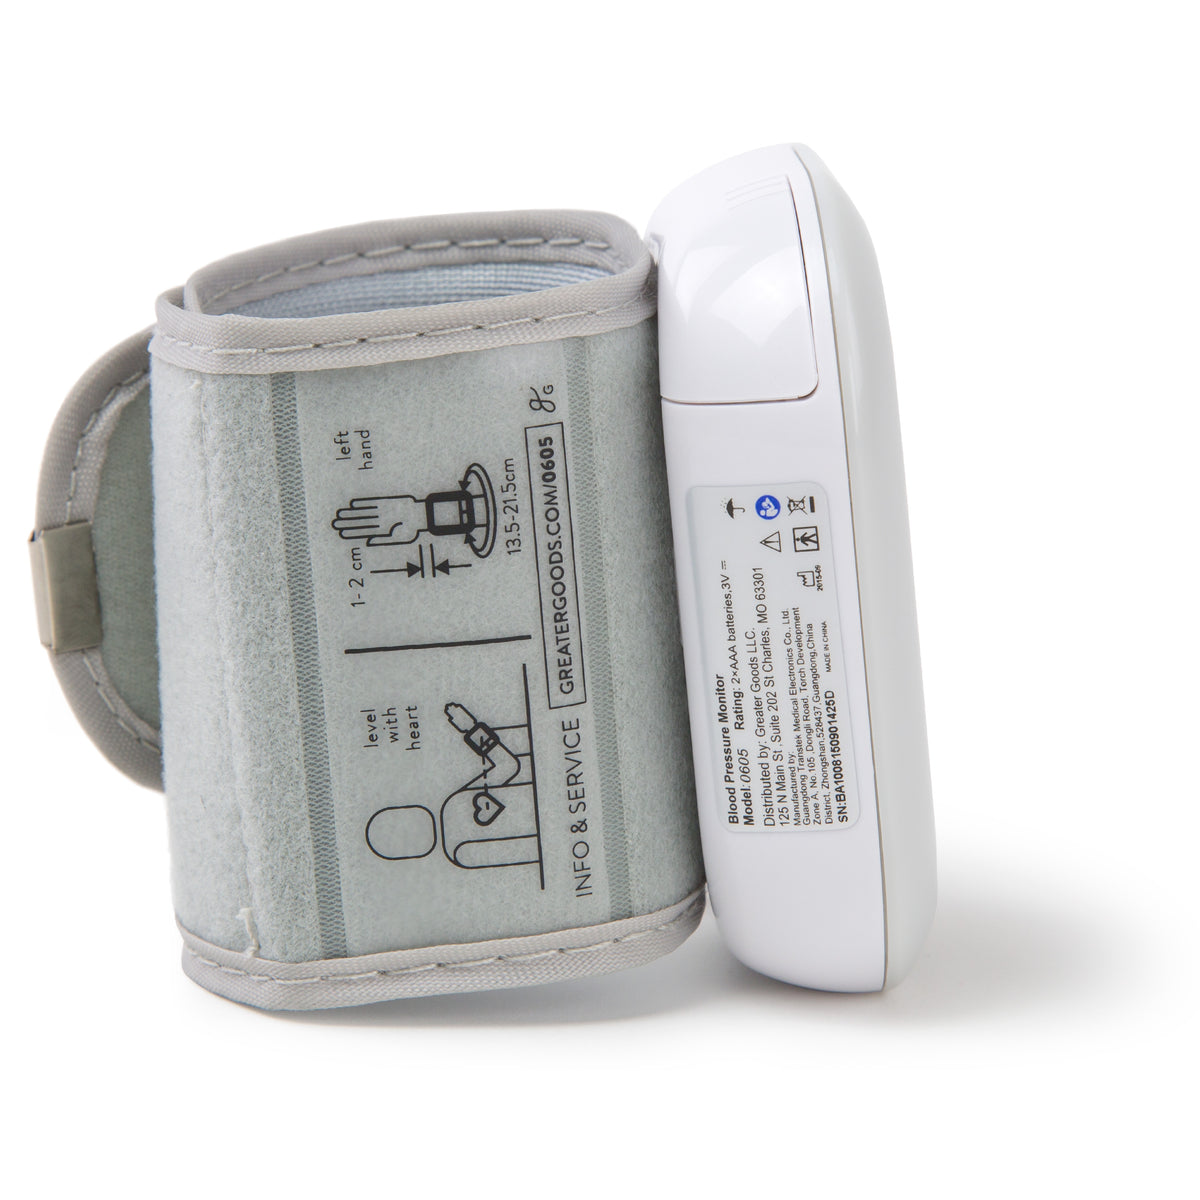 Basic Wrist Blood Pressure Monitor - Greater Goods